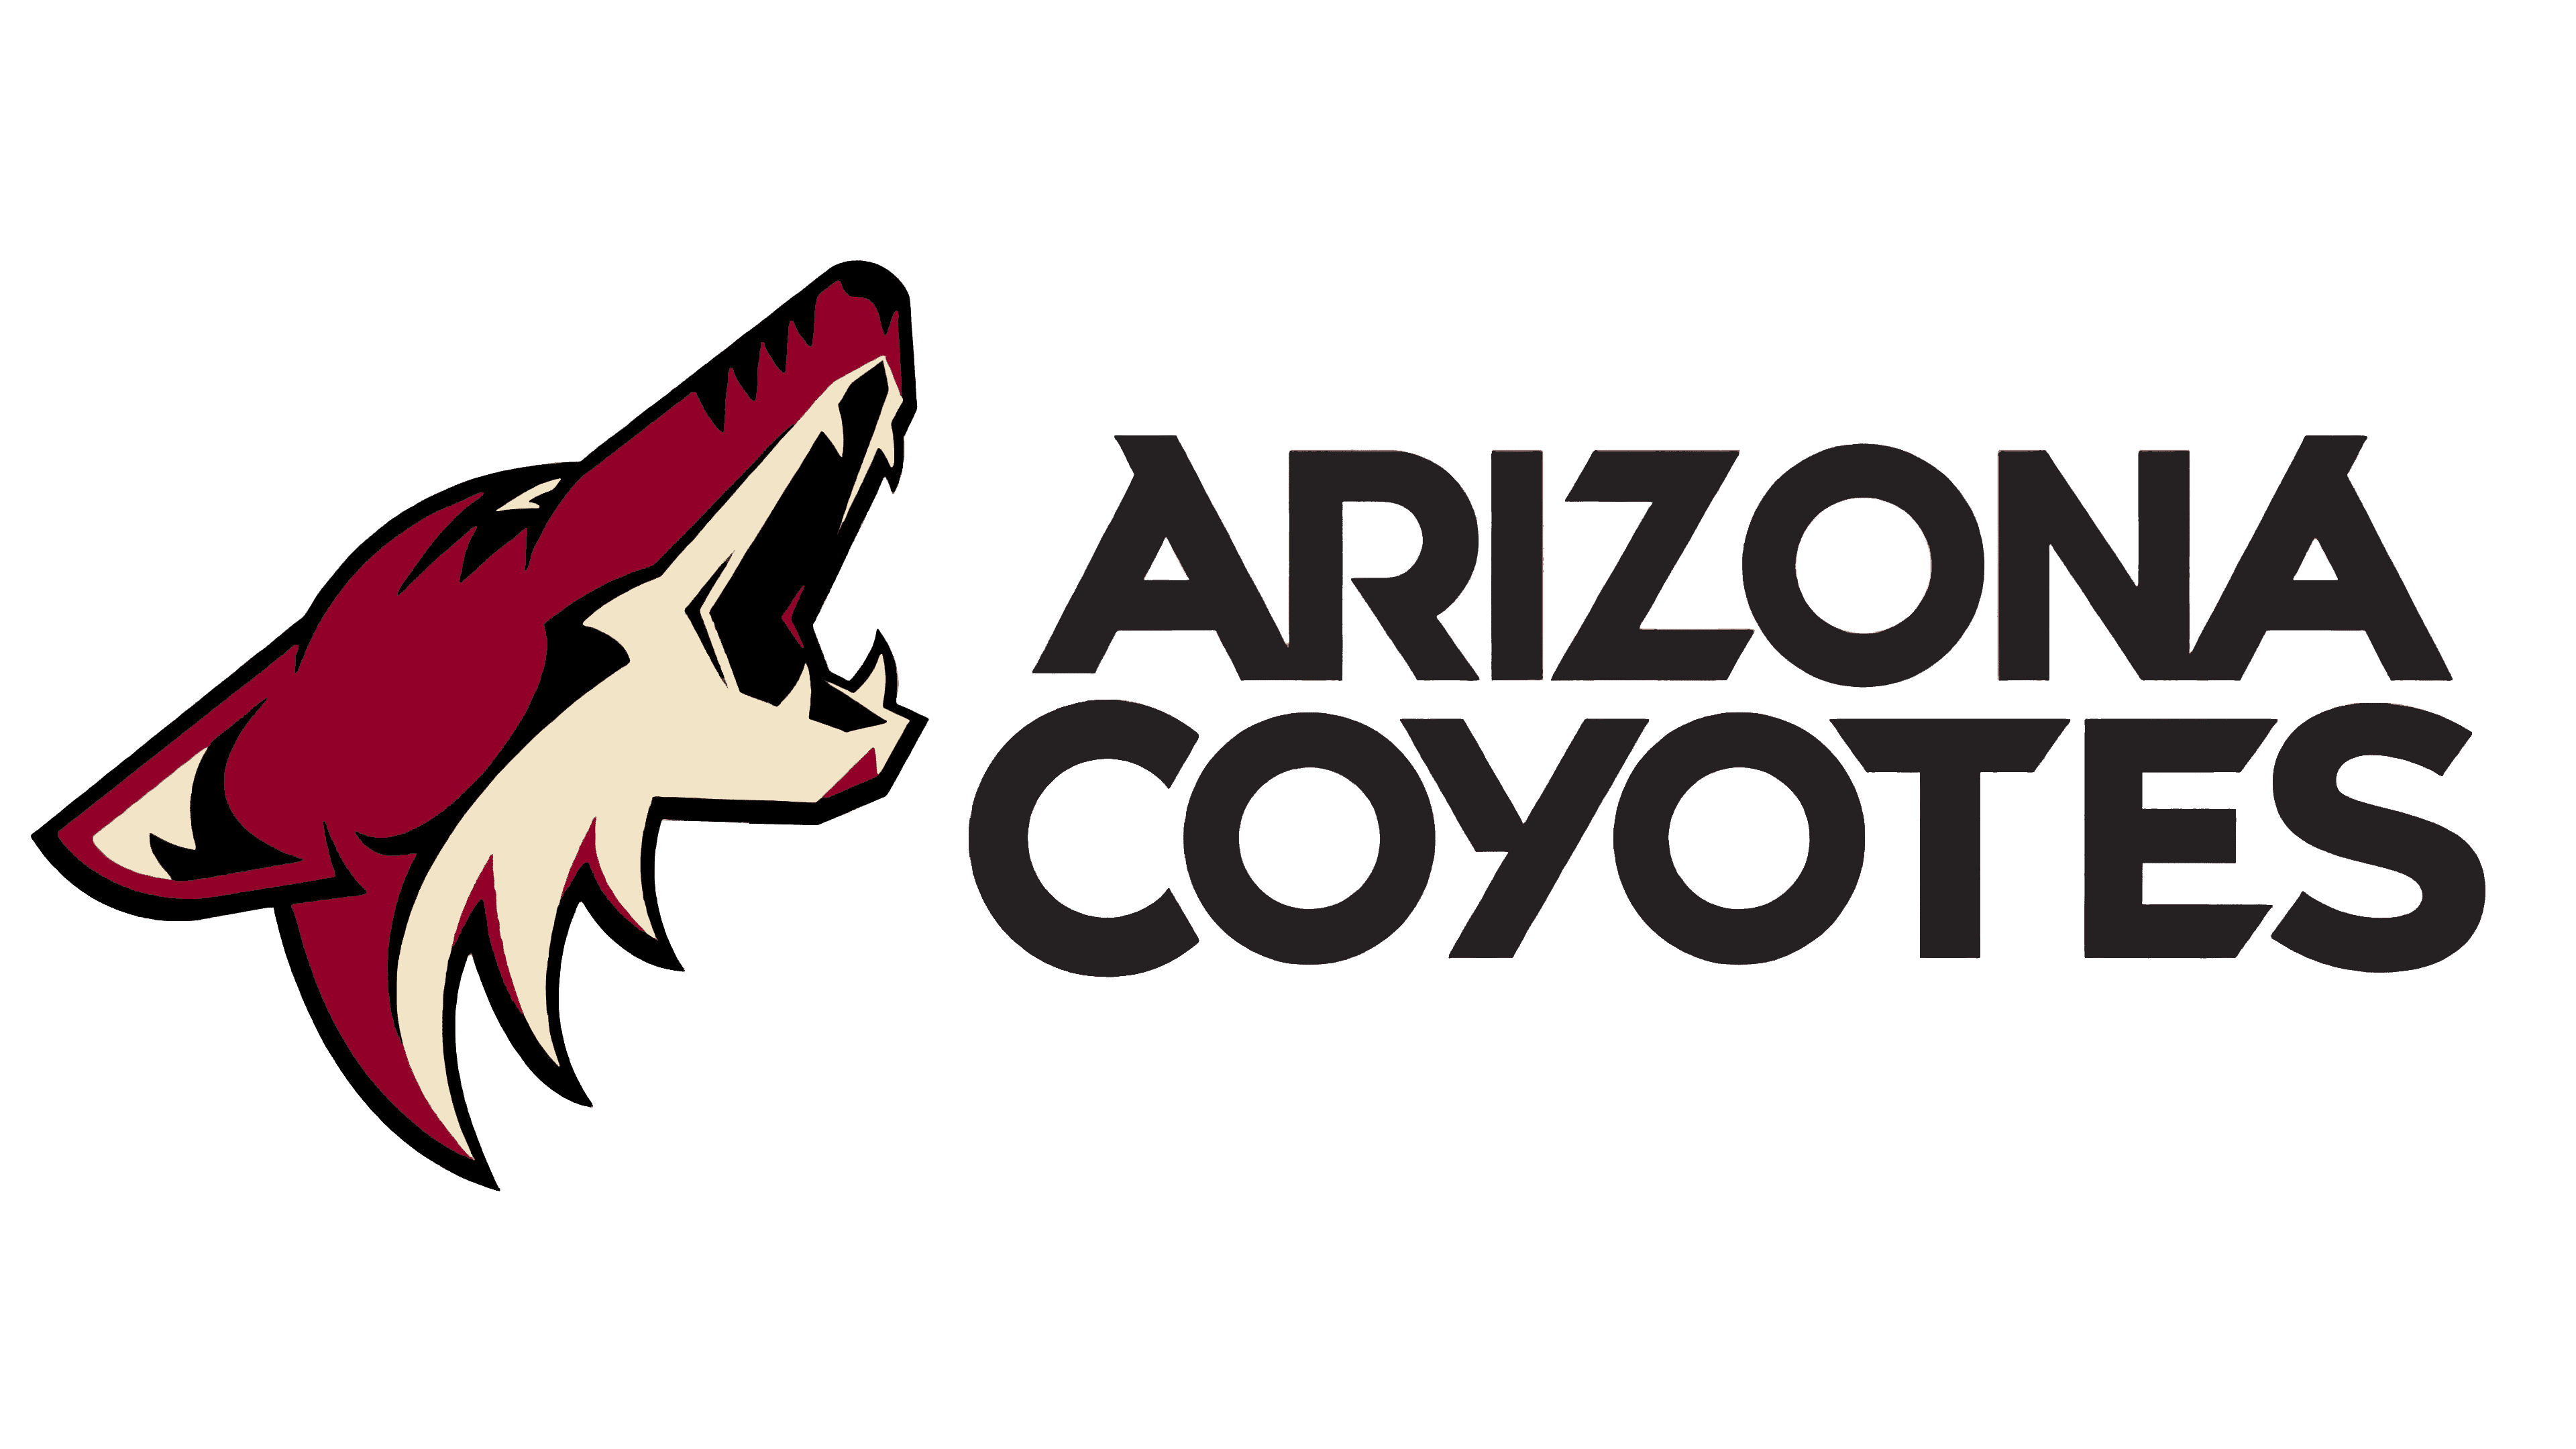 Arizona Coyotes Logos - National Hockey League (NHL) - Chris